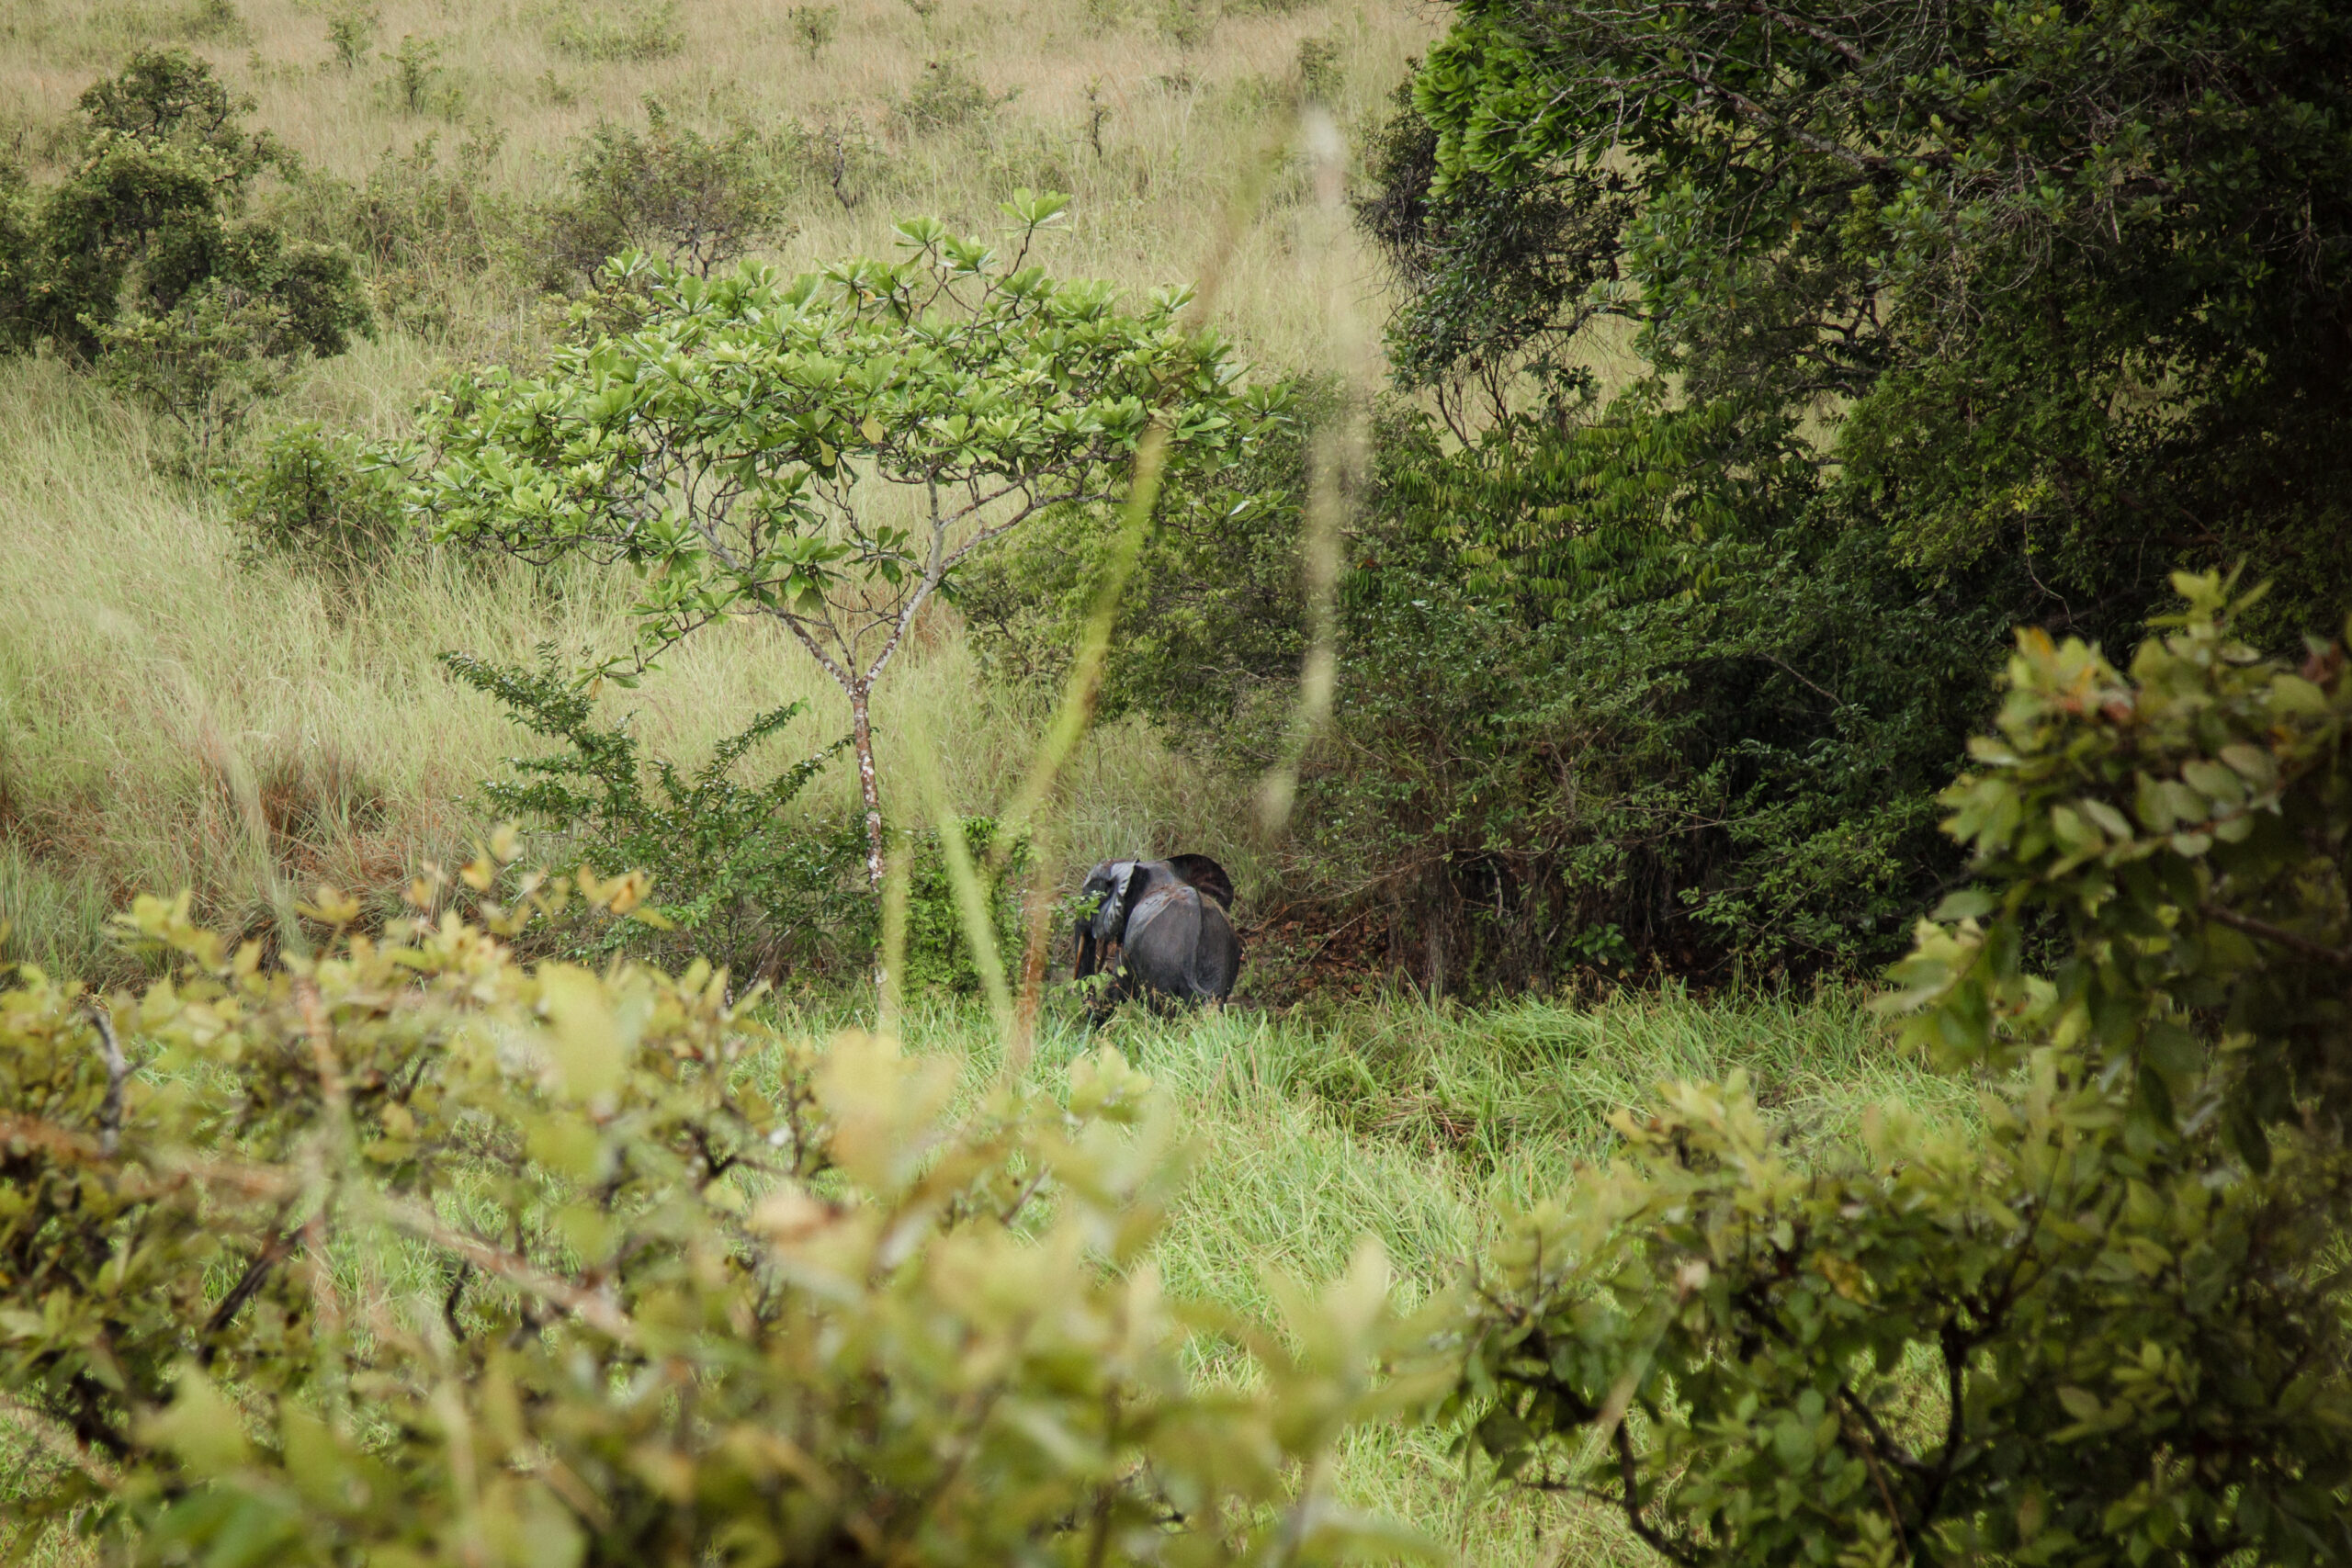 With a drastic decline in tropical fruit, Gabon’s rainforest mega-gardeners go hungry – Mongabay